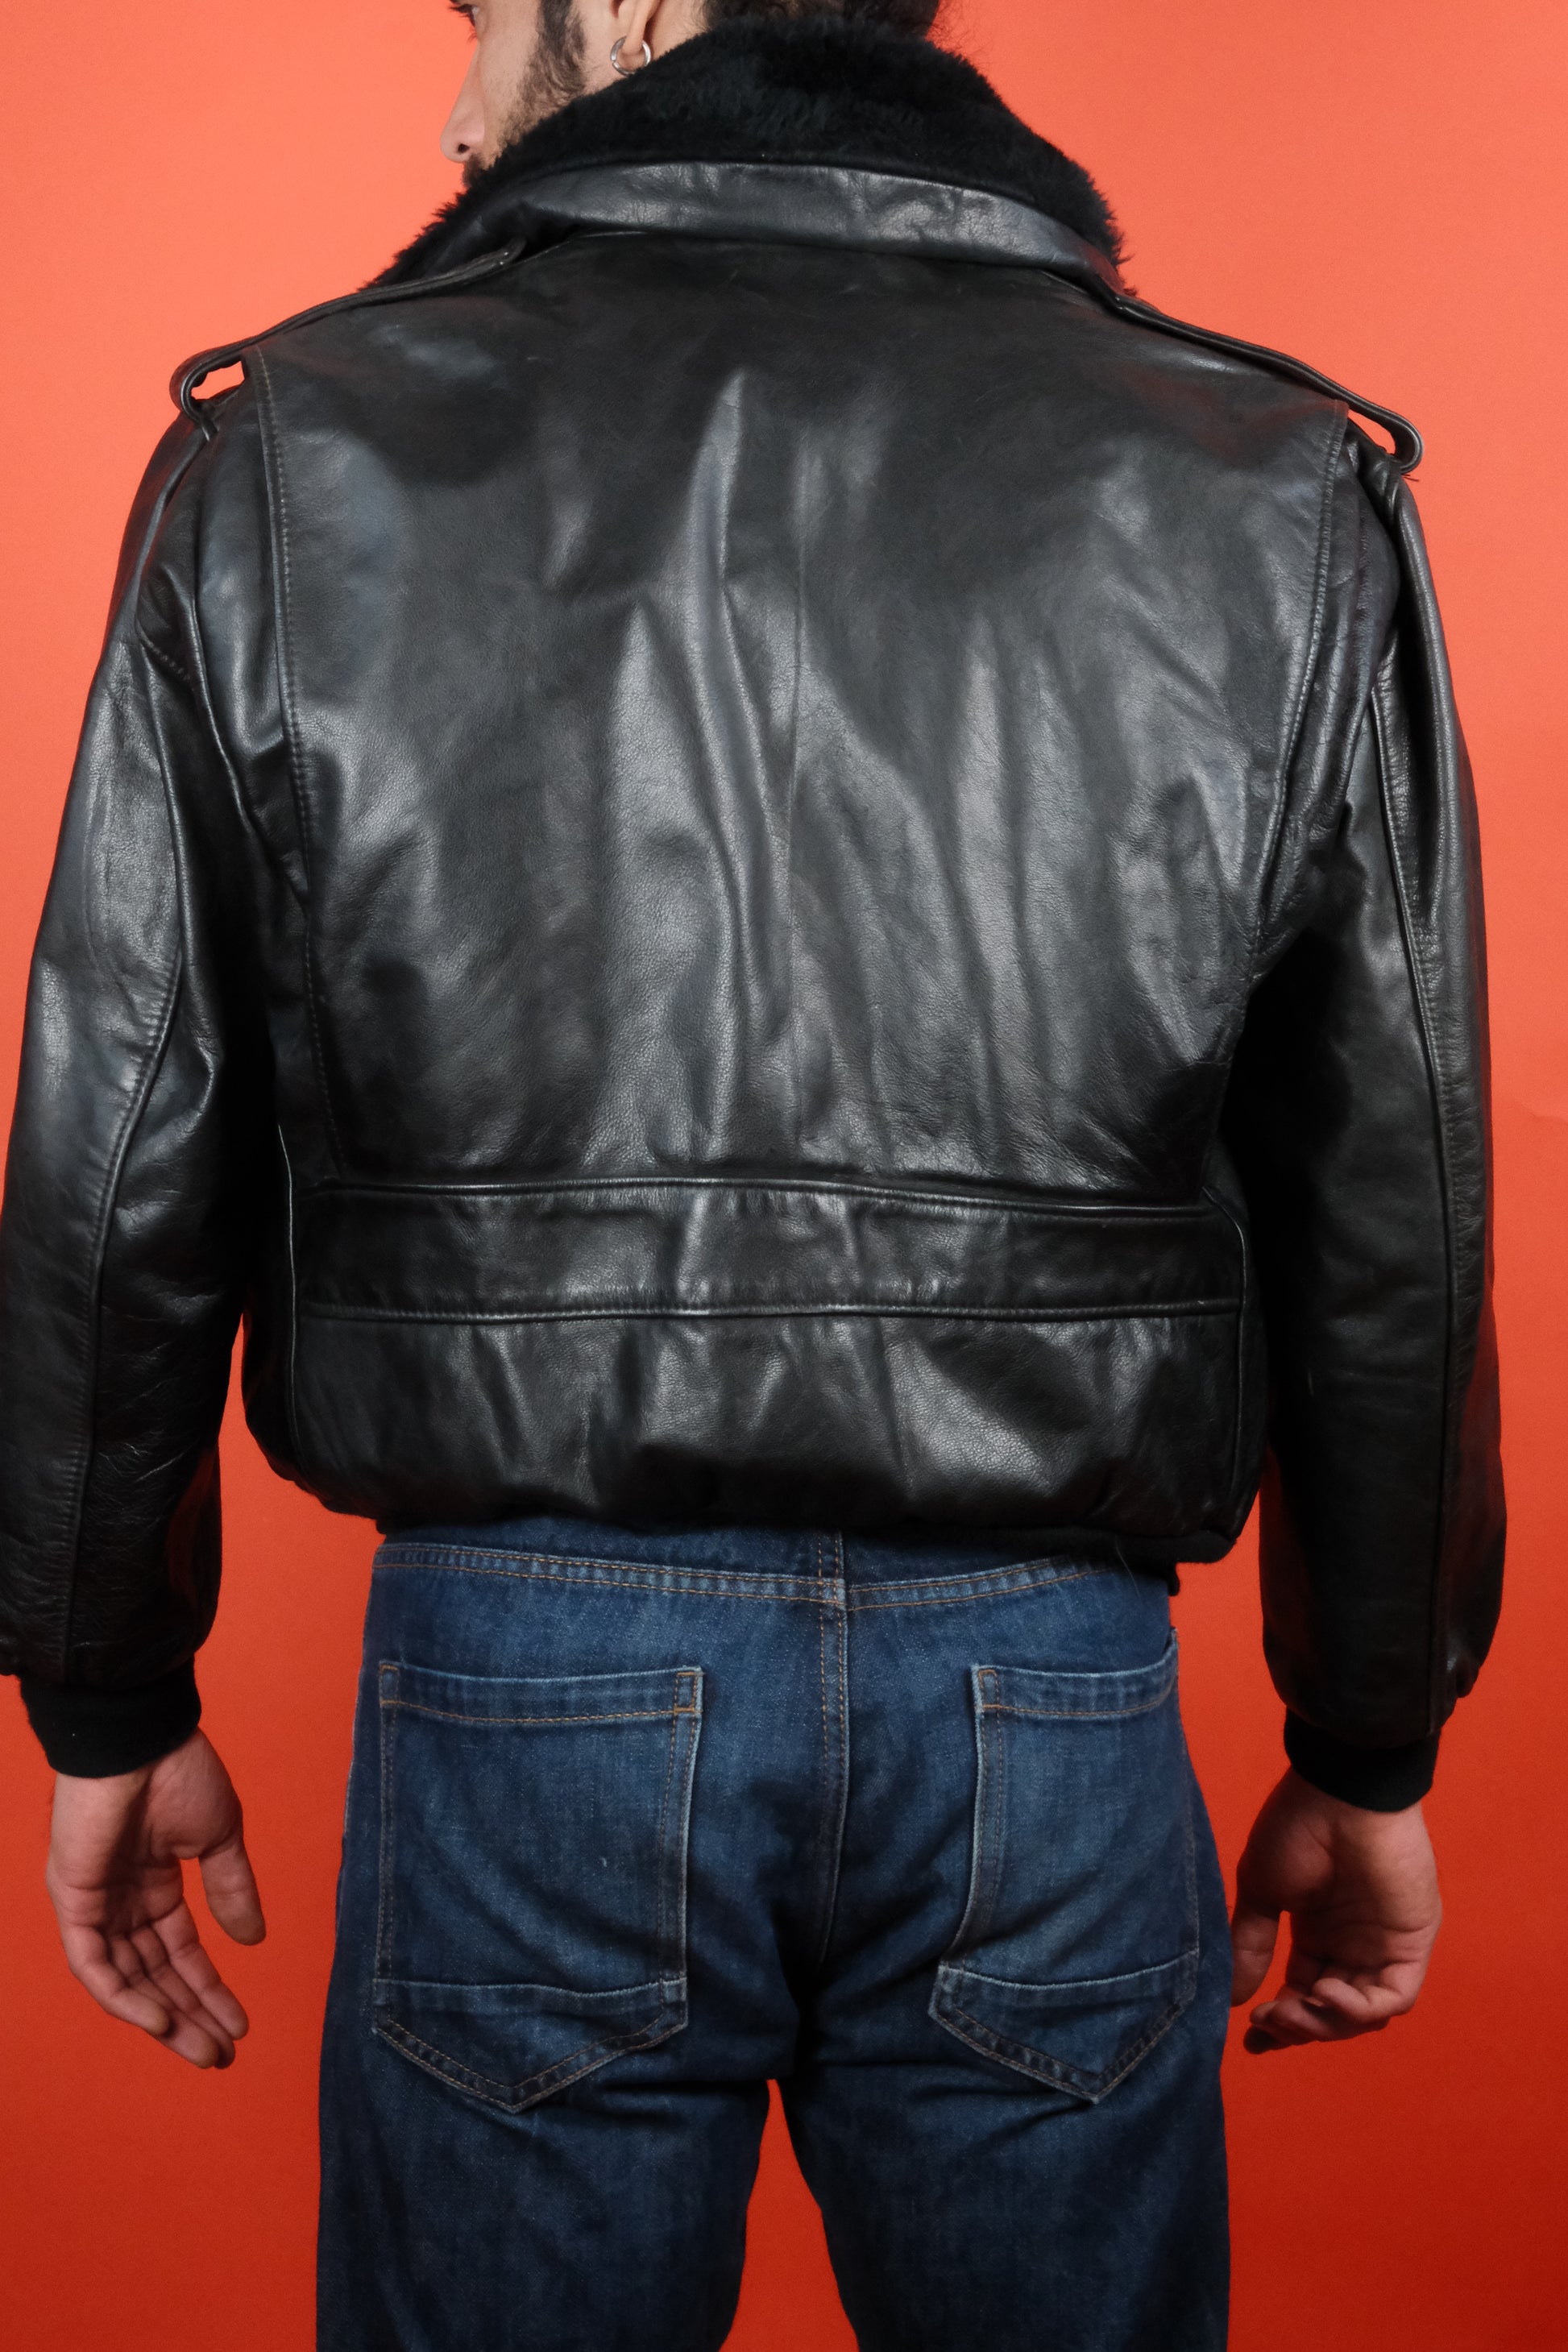 Type A-2 Leather Jacket w/ Detachable Warm Lining 'M/48' - vintage clothing clochard92.com